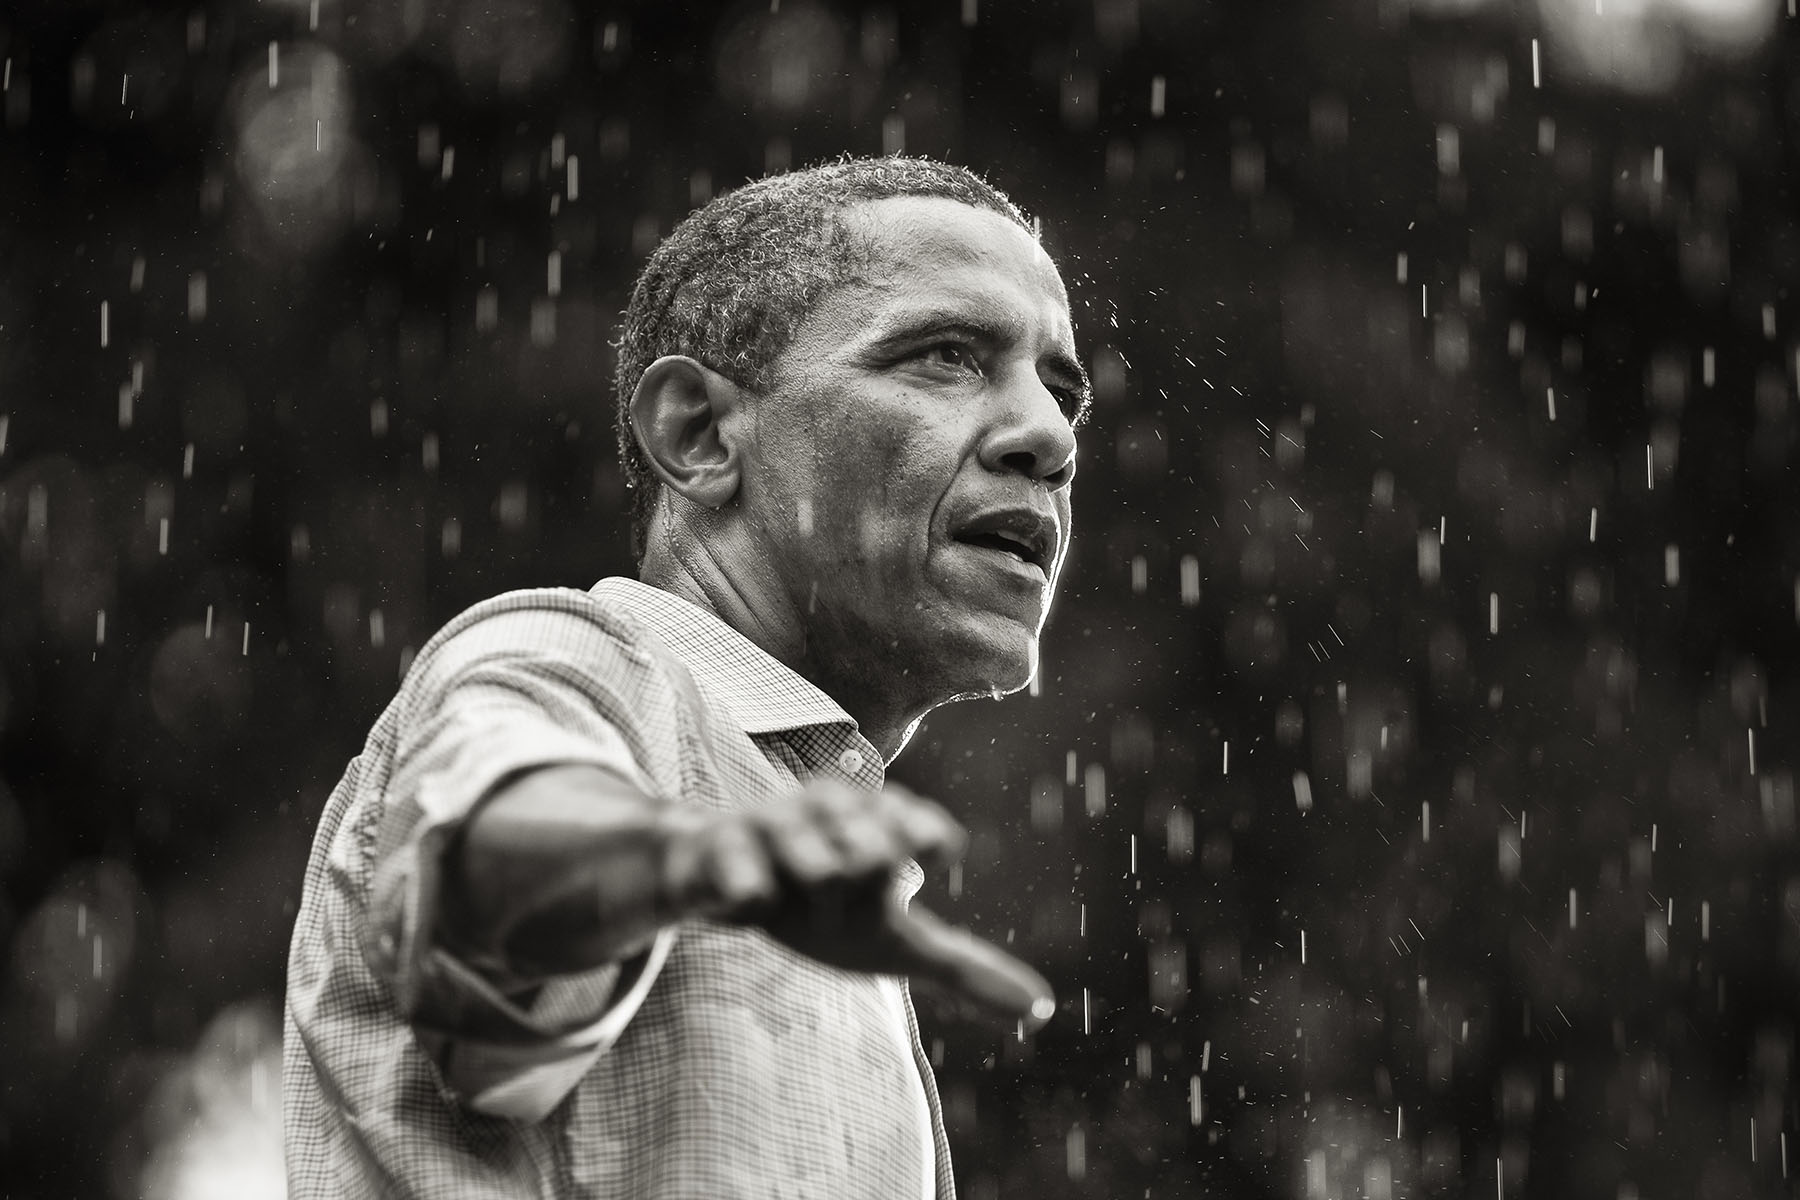 U.S. President Barack Obama speaks in the rain during a campaign rally in Glen Allen, Virginia